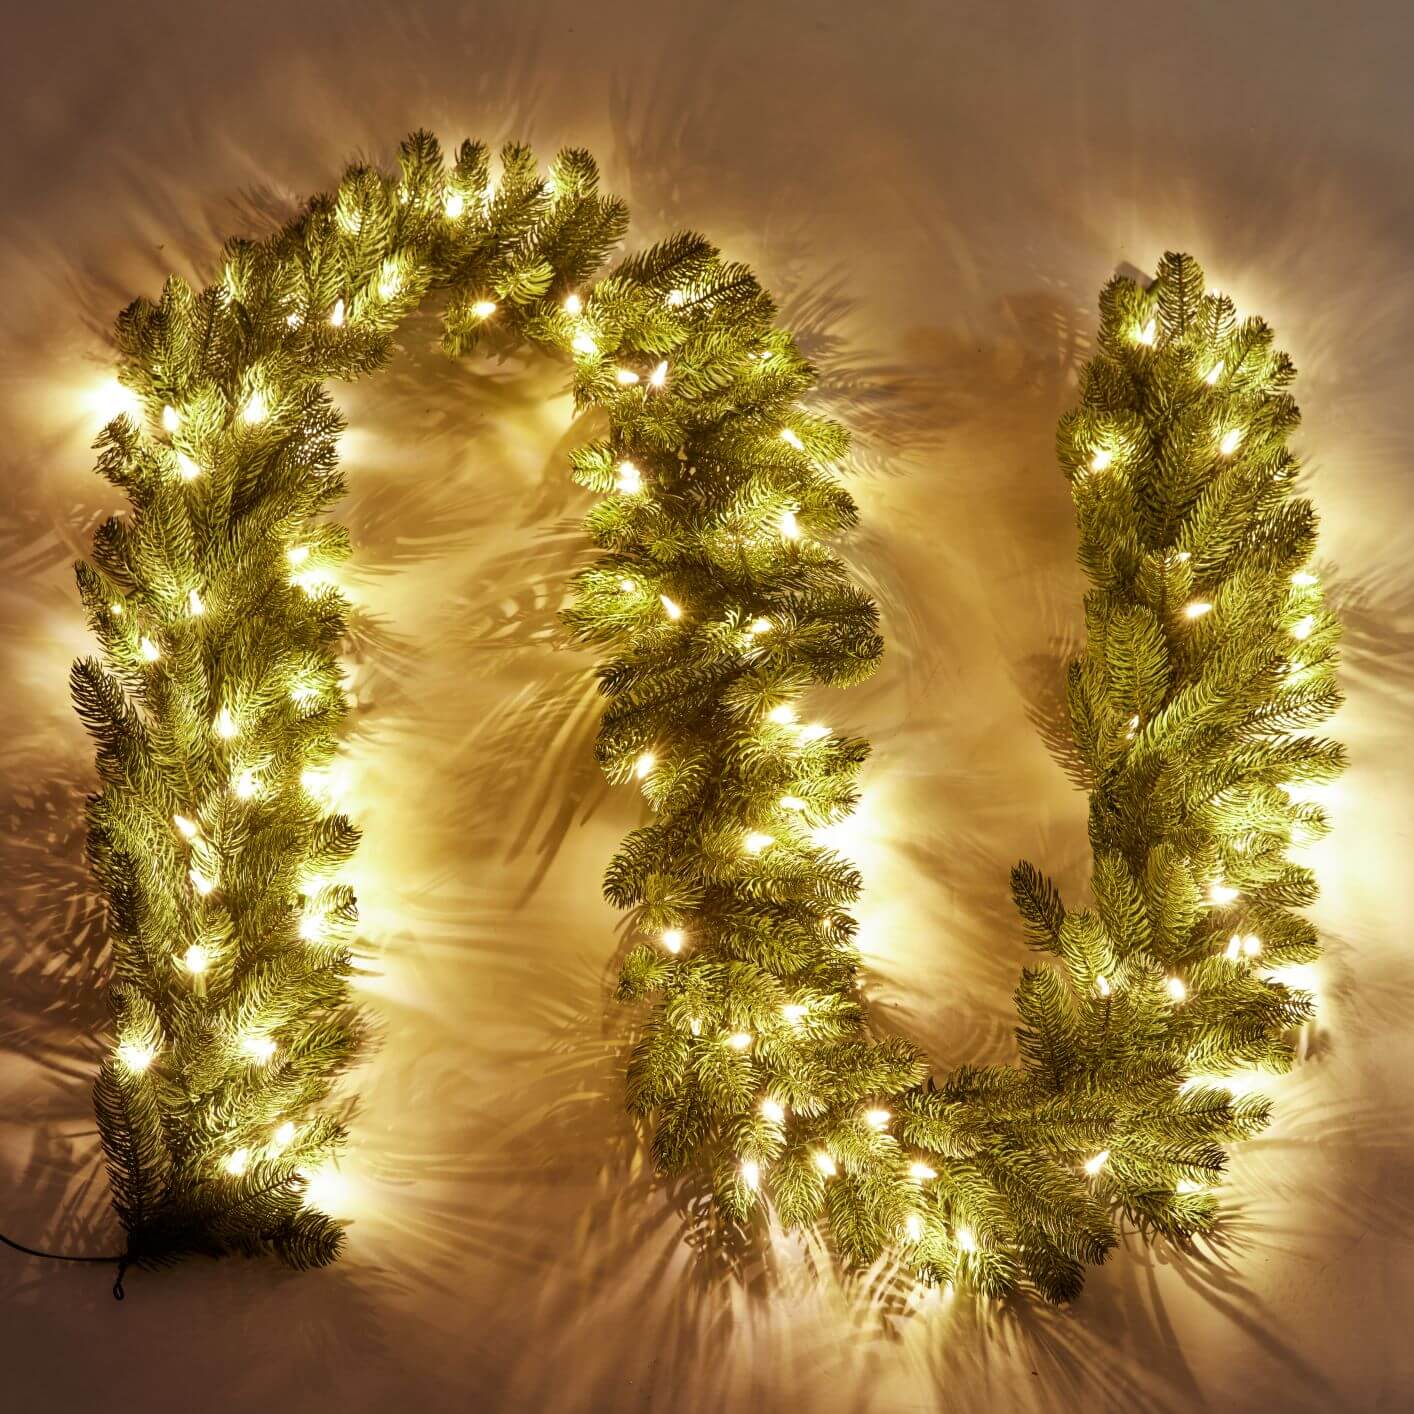 King of Christmas 9' x 10" Royal Fir Garland with Warm White LED Lights (Plug Operated)